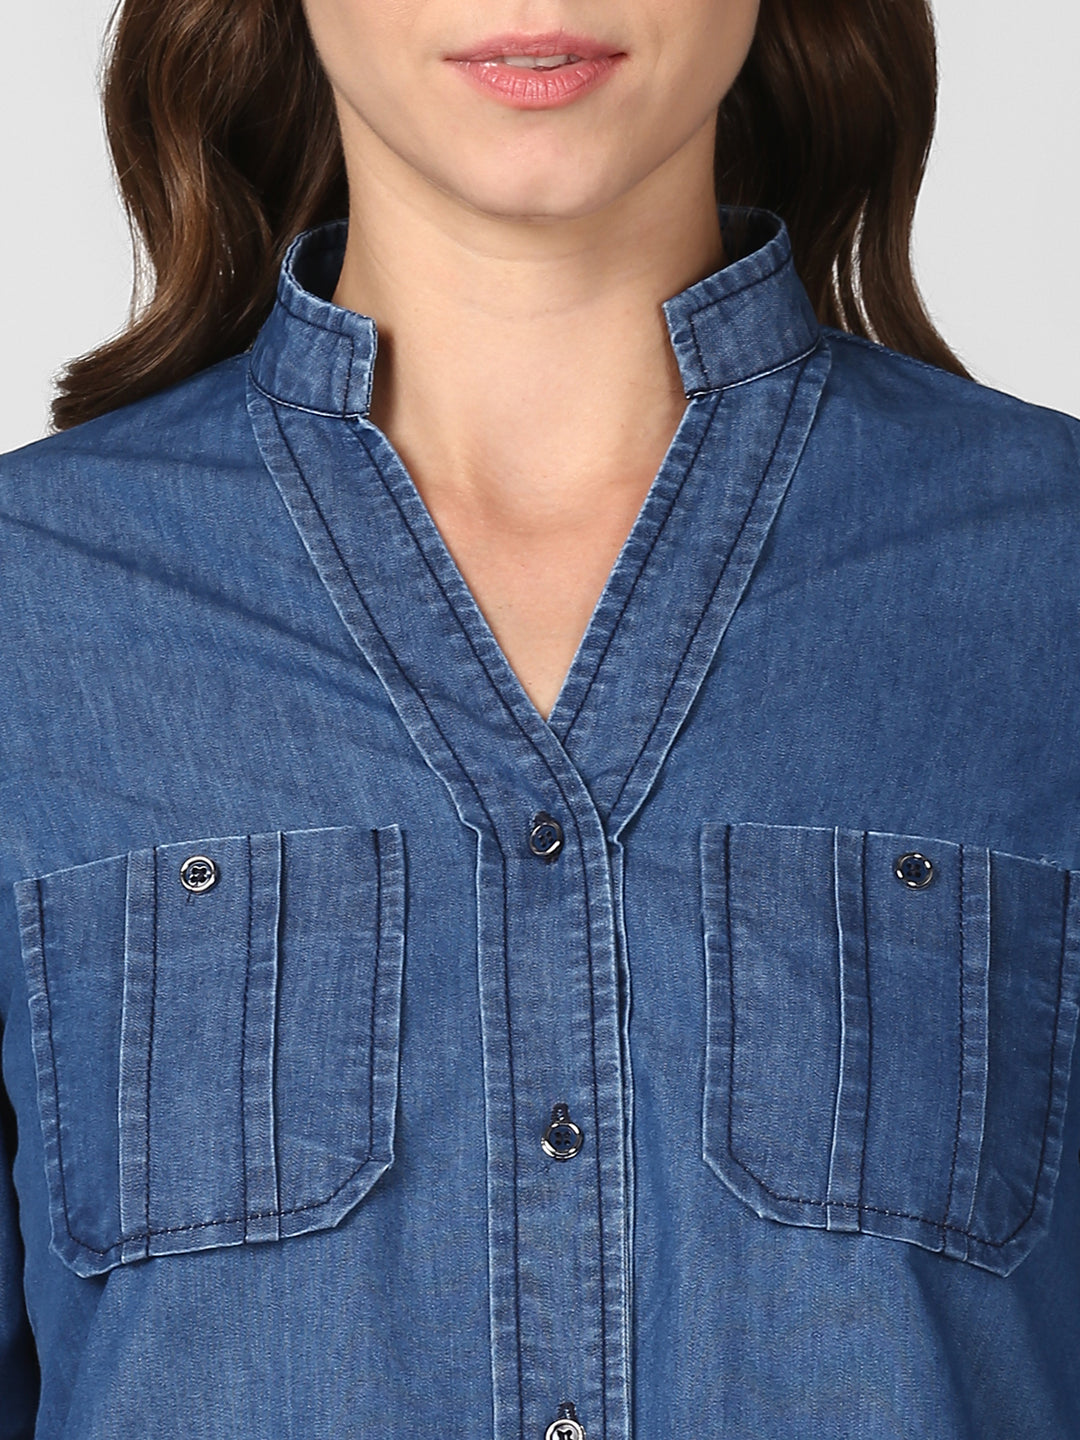 Women's Blue Denim Top cum shirt with striped pocket detail